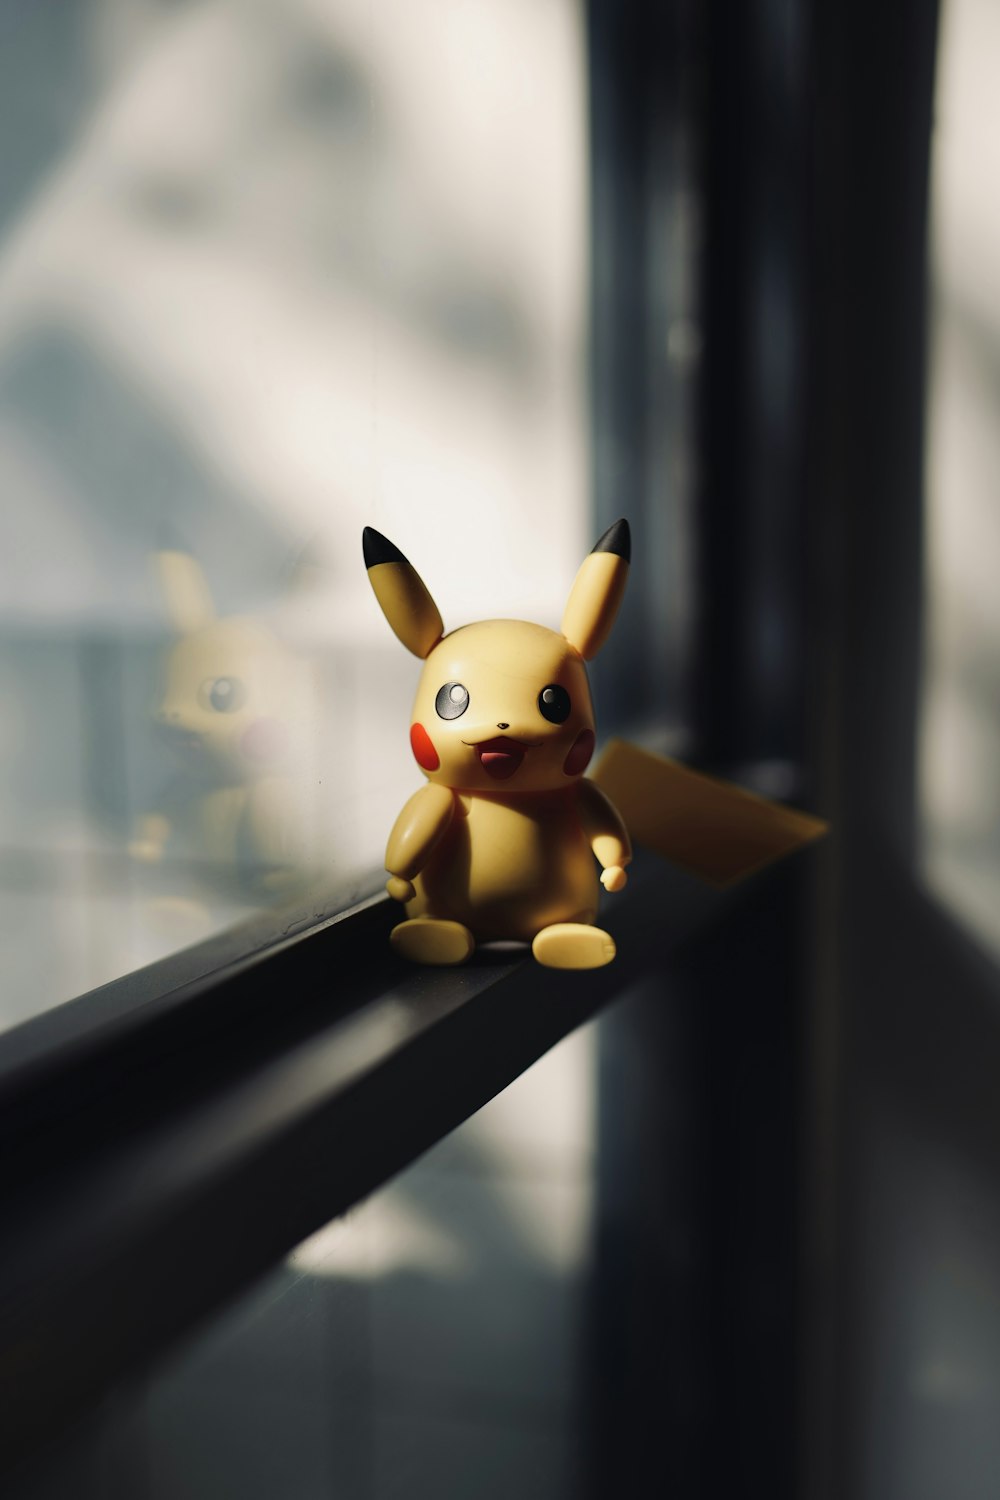 a toy pikachu sitting on a window sill